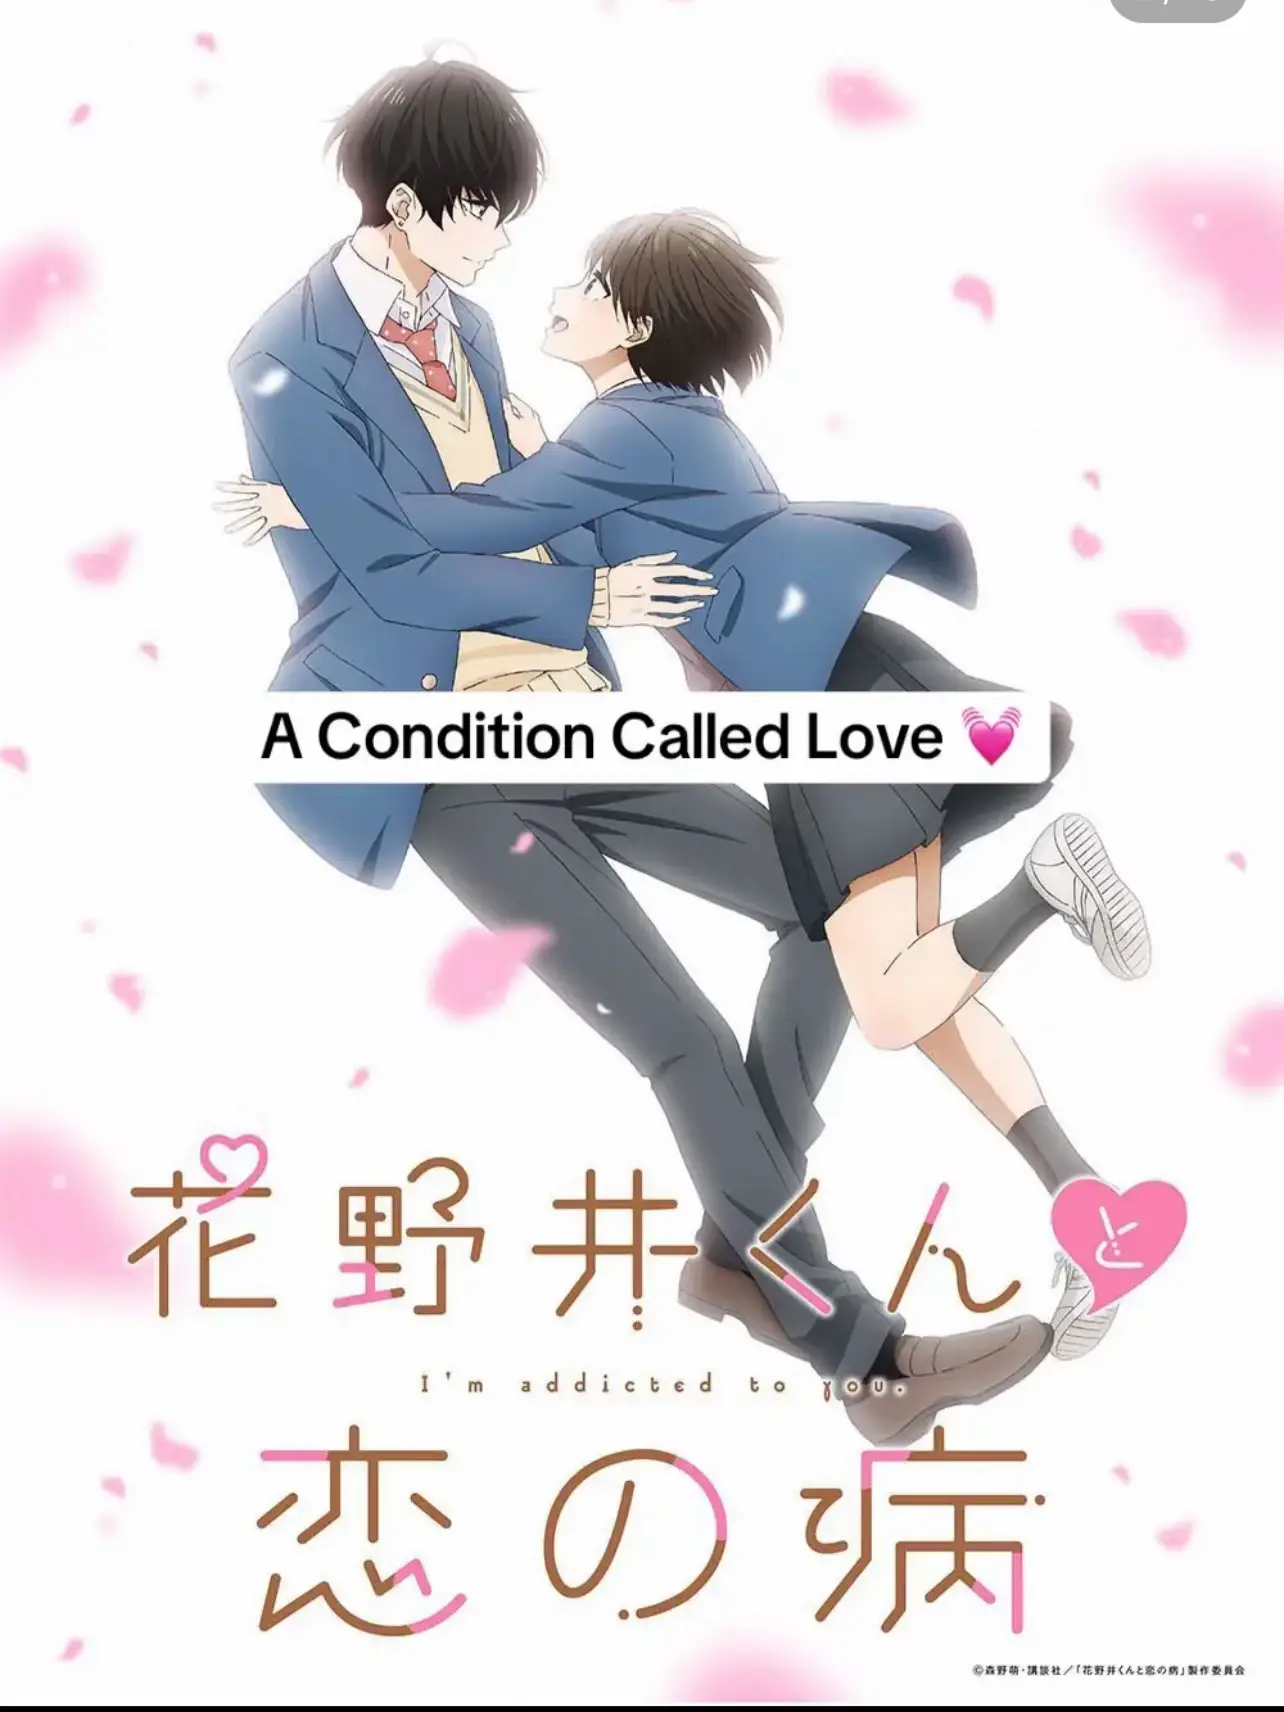 Romantic Anime Movies to Watch - Lemon8 Search